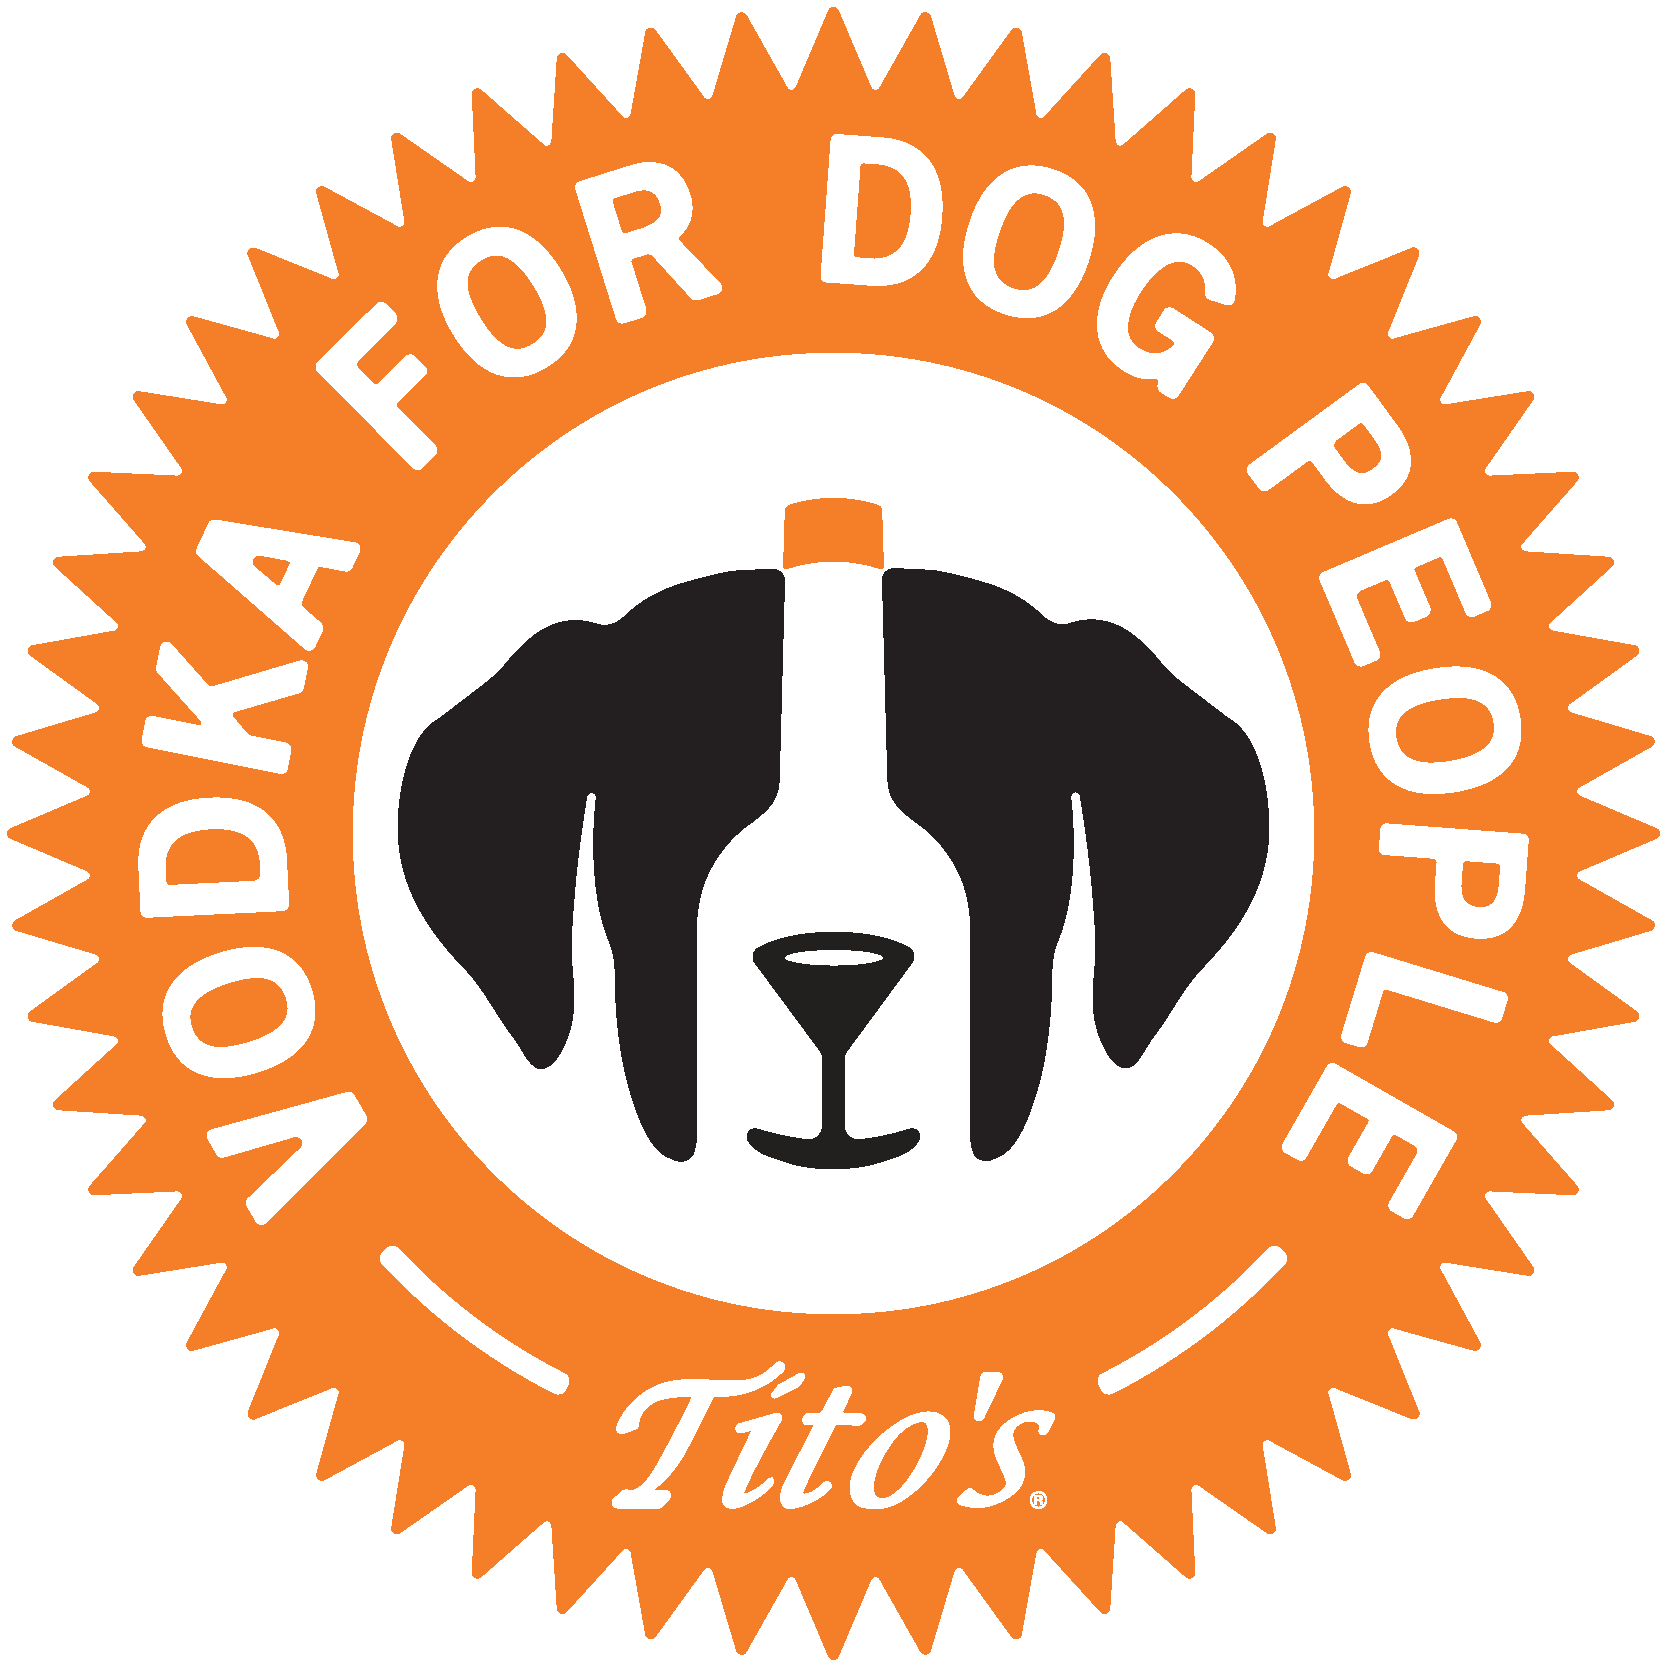 Tito's Handmade Vodka For Dog People Logo